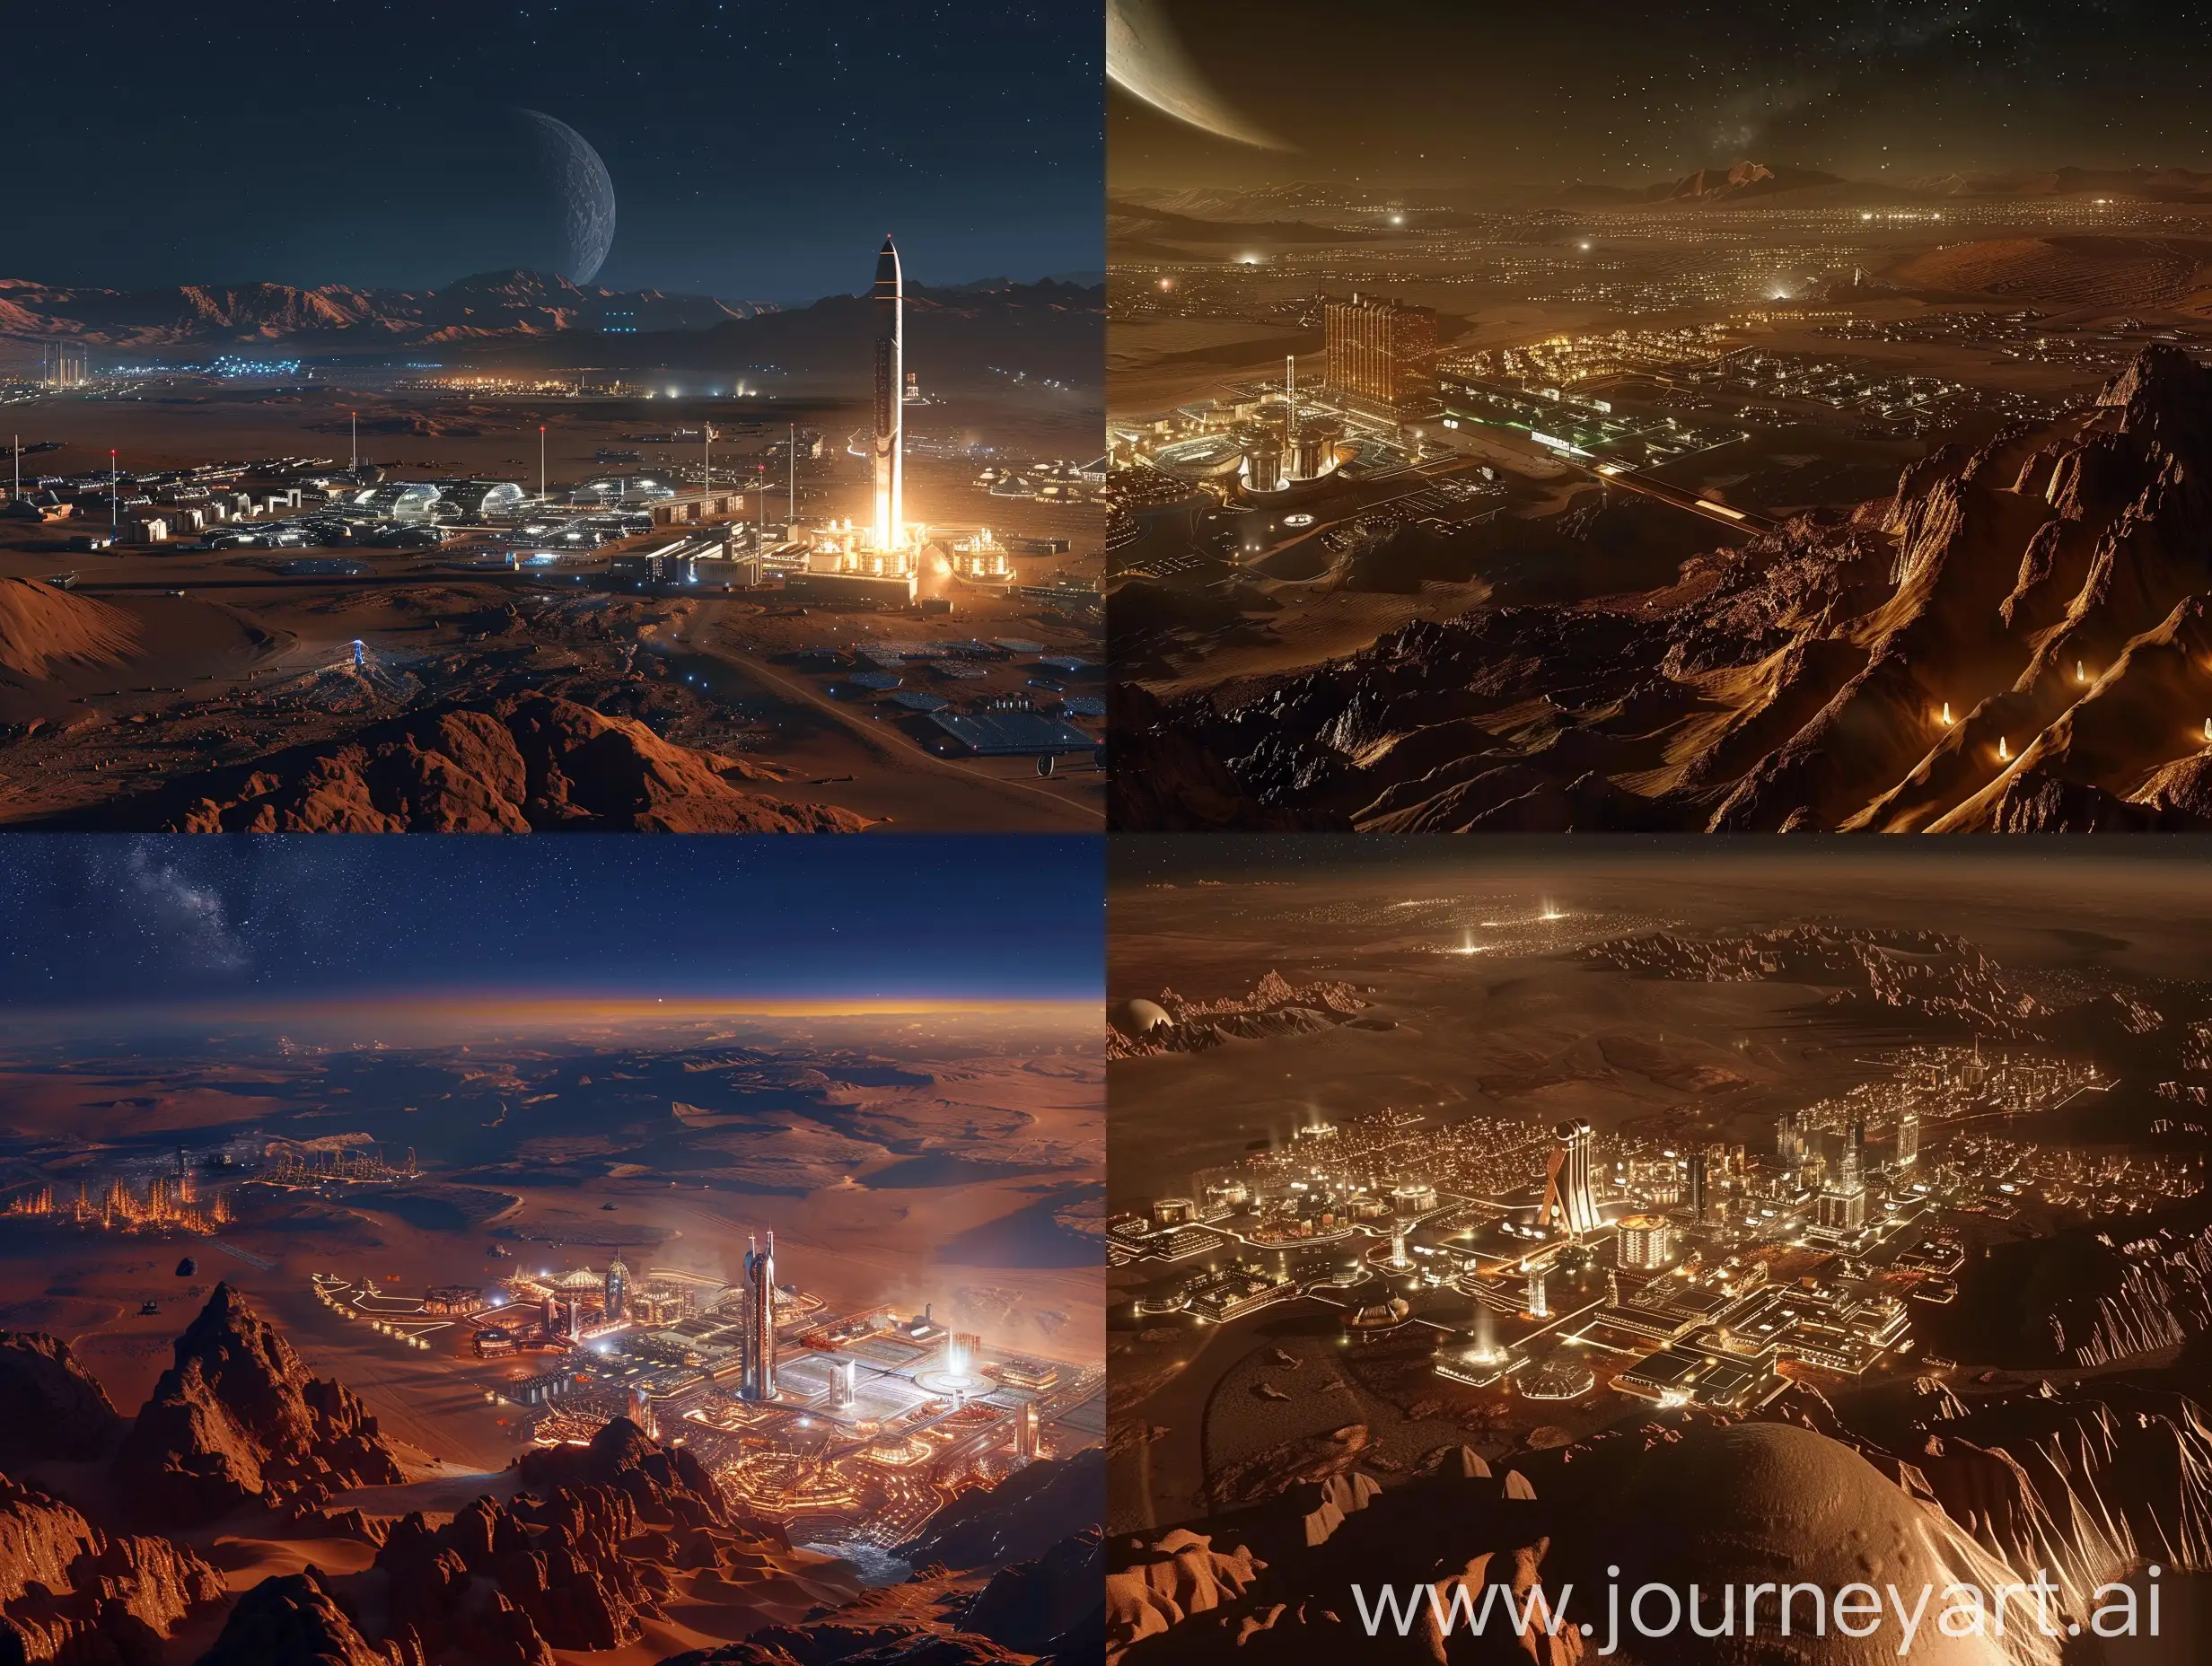 Futuristic-Night-Cityscape-Contrasting-Mars-Environment-High-Altitude-View